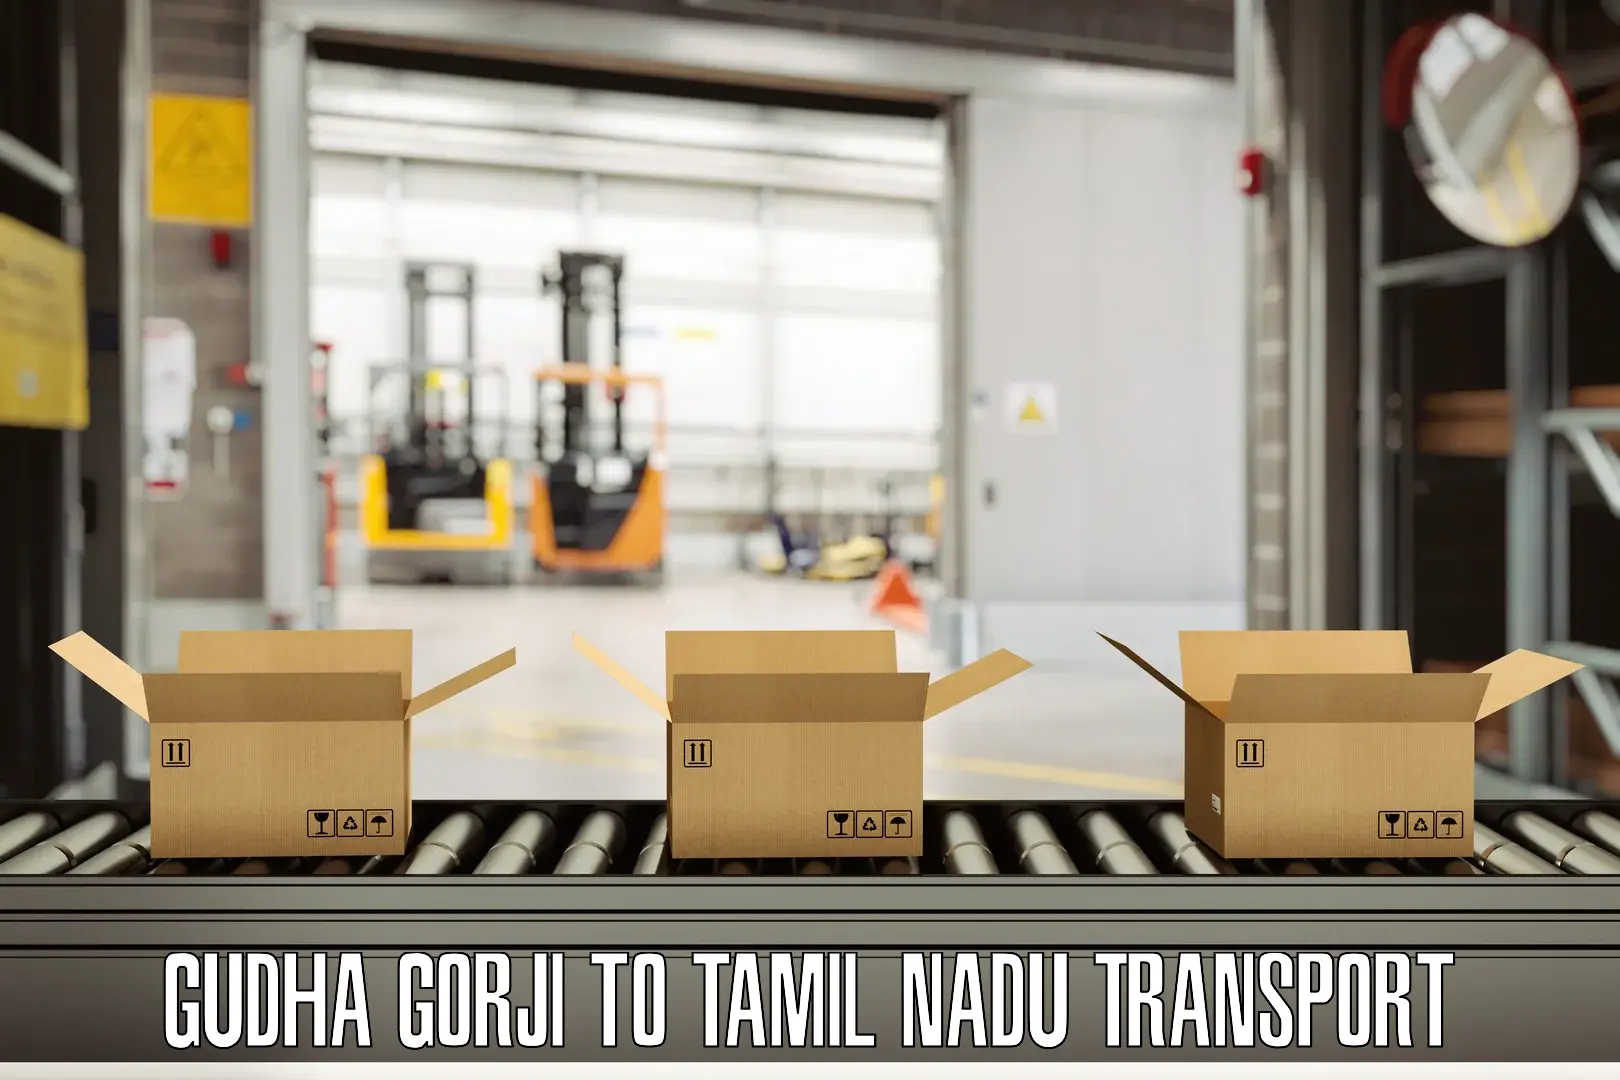 Transport in sharing Gudha Gorji to Thiruvadanai